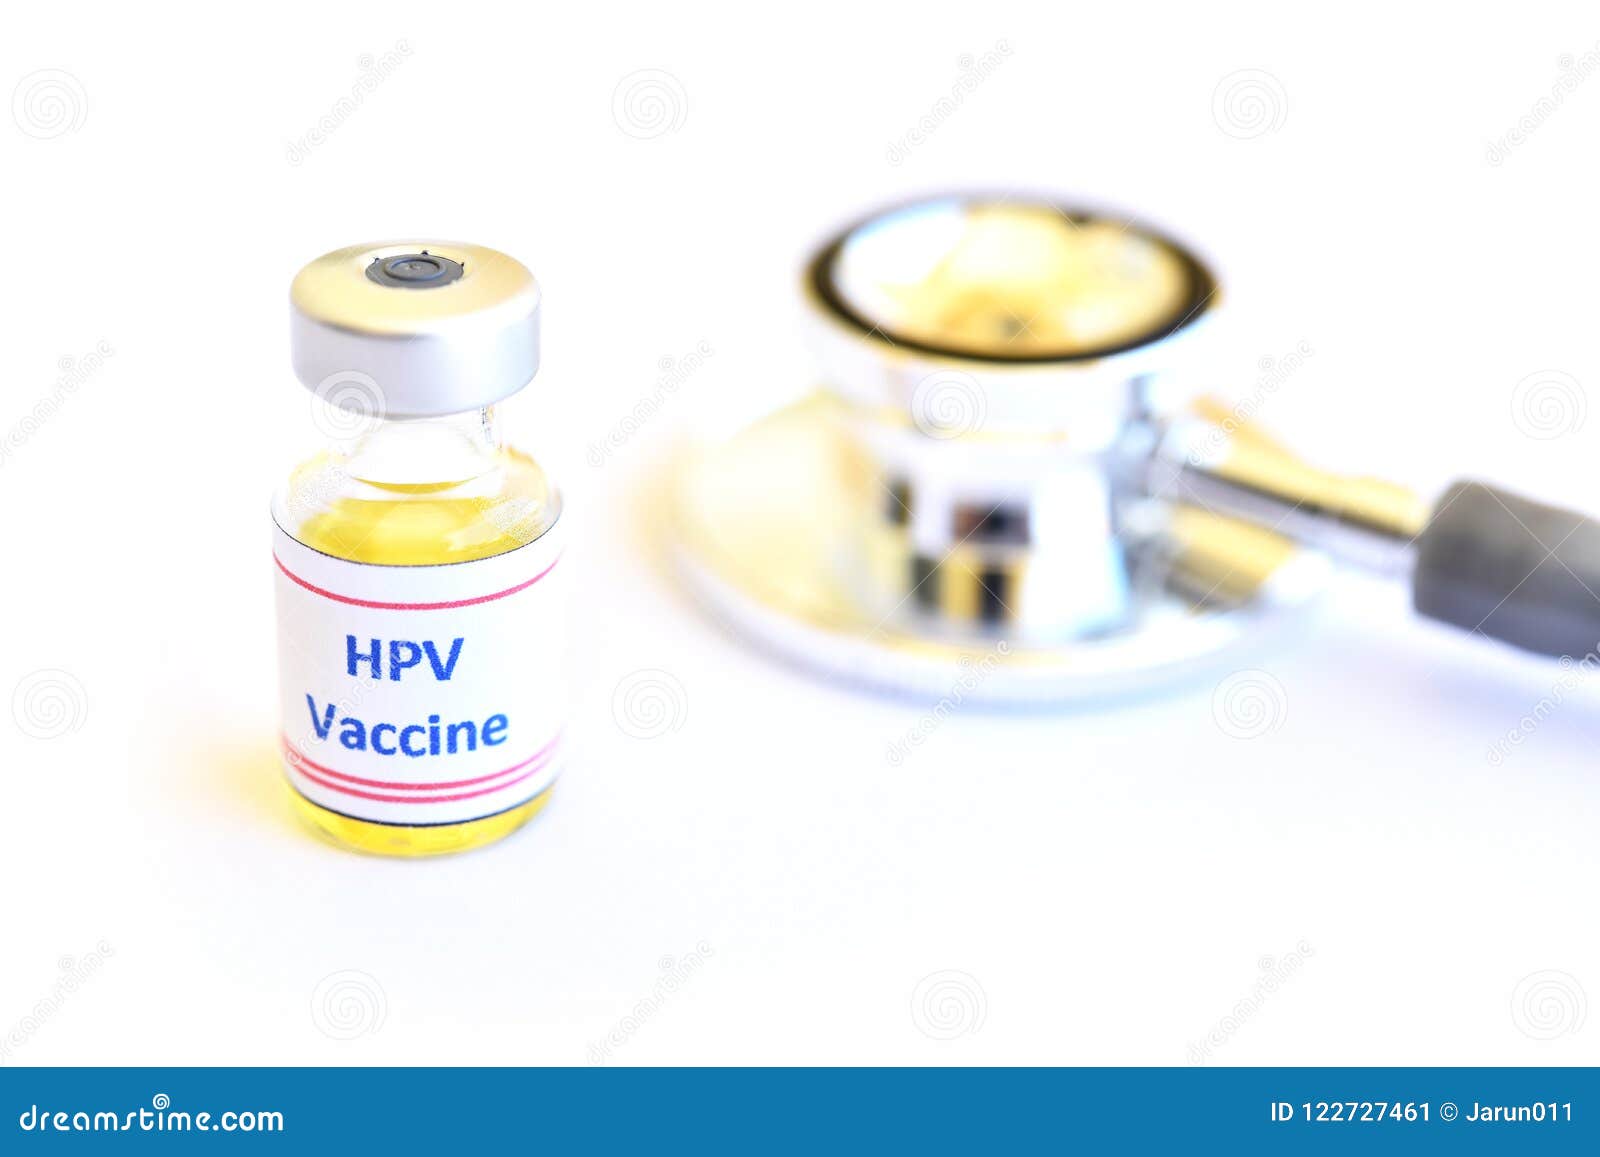 Human papillomavirus vaccine cervarix. Benign cancer ppt